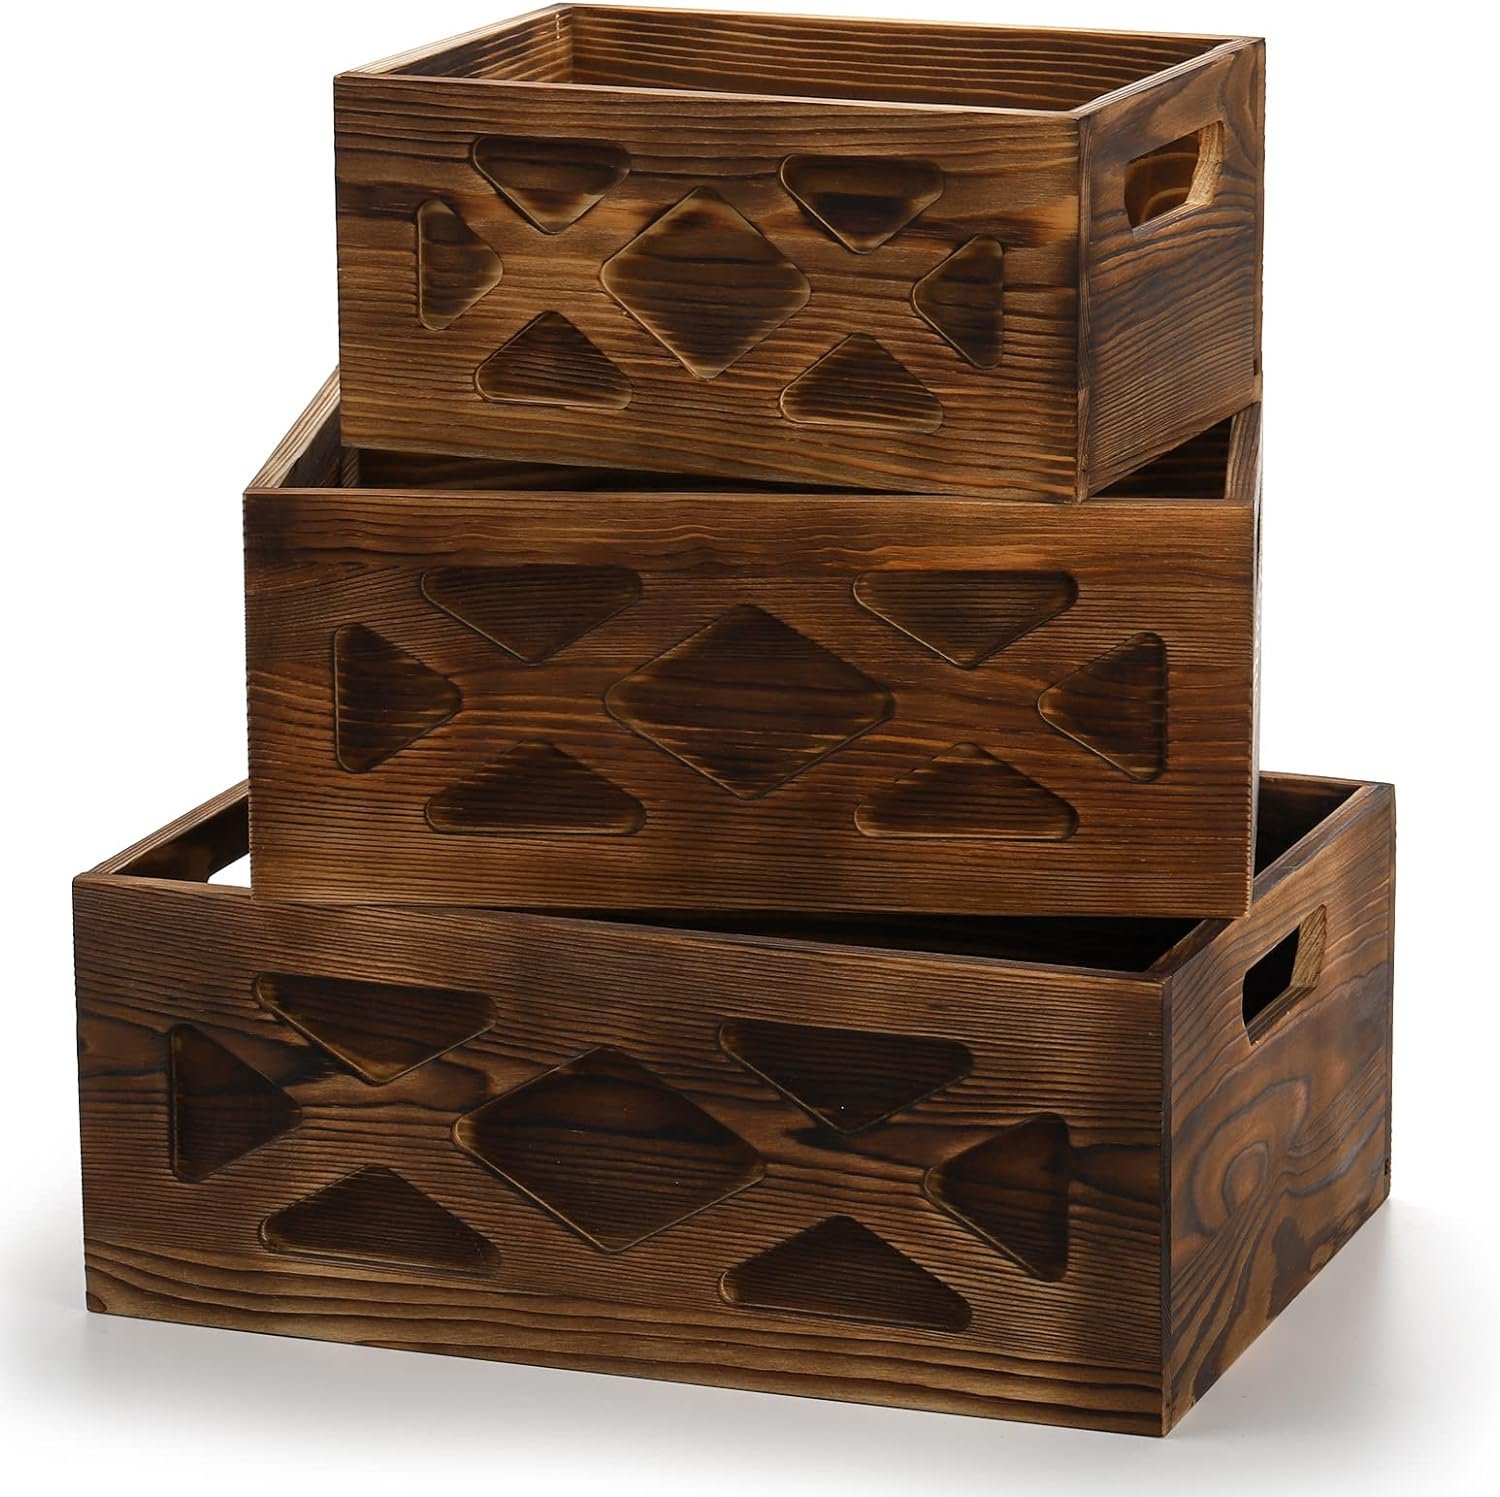 Fasmov Wood Nesting Storage Crates Review